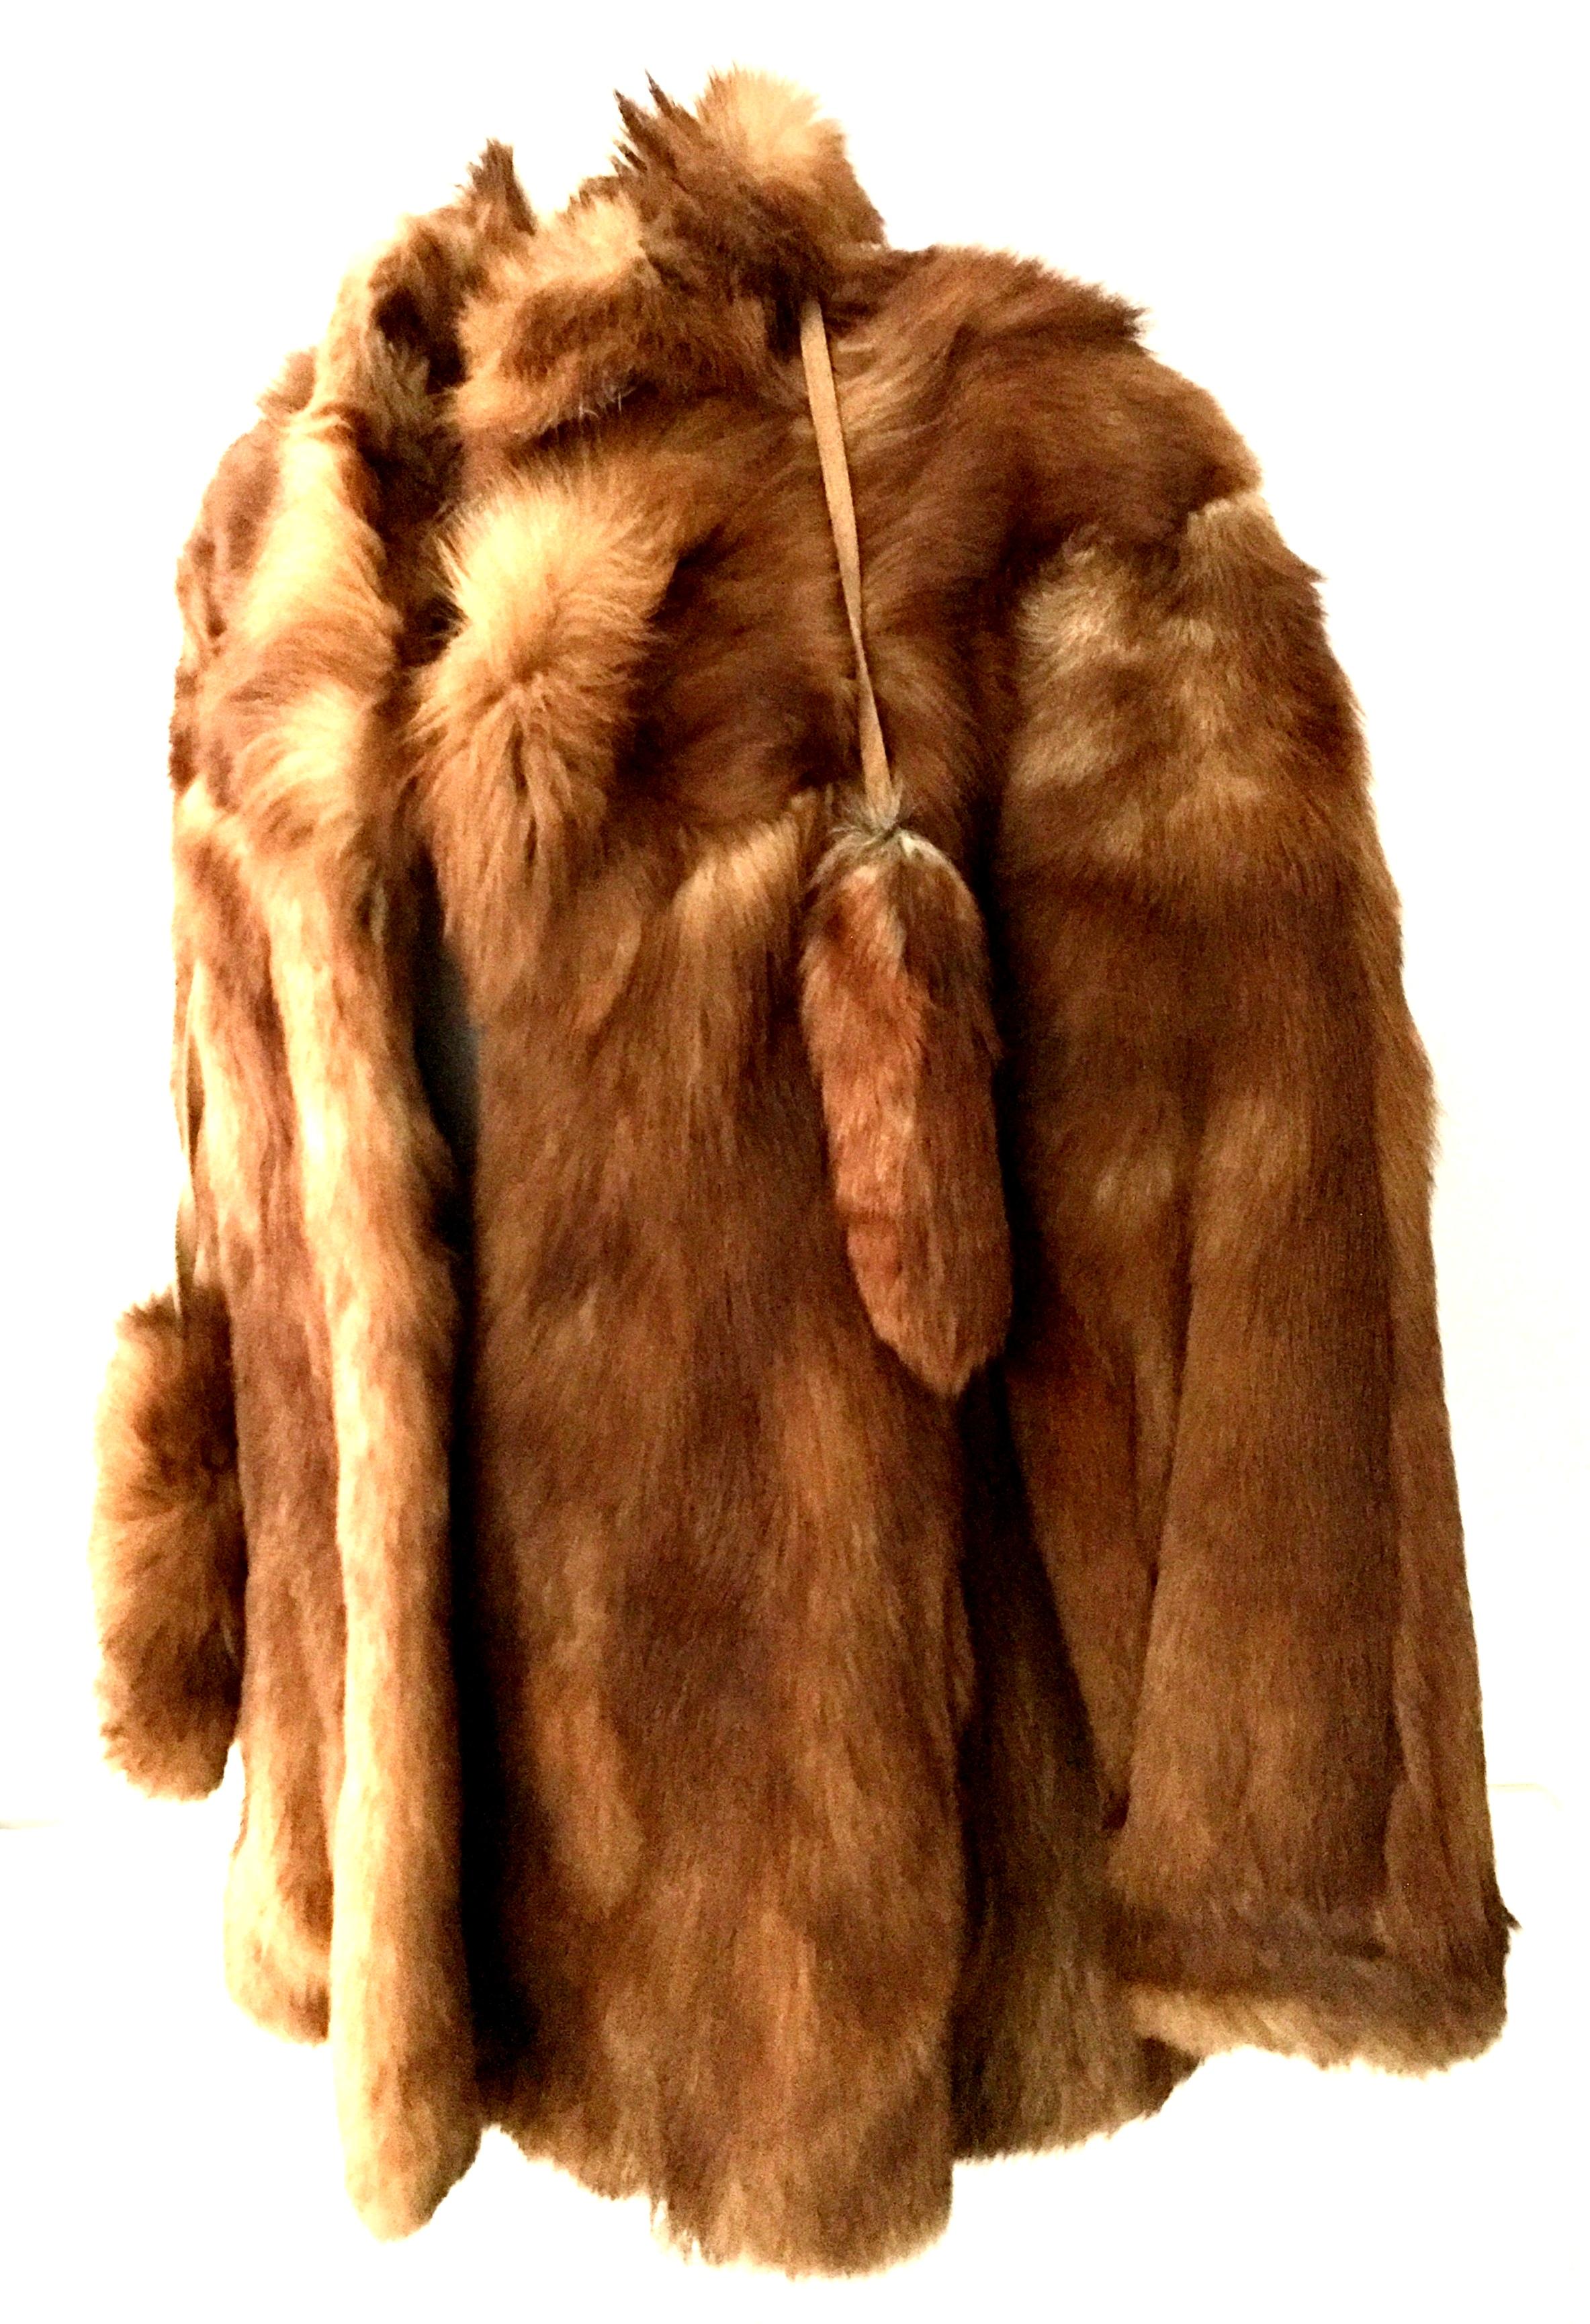 20th Century German Red Fox Fur Coat By Eich Pelz. This authentic red fox fur 